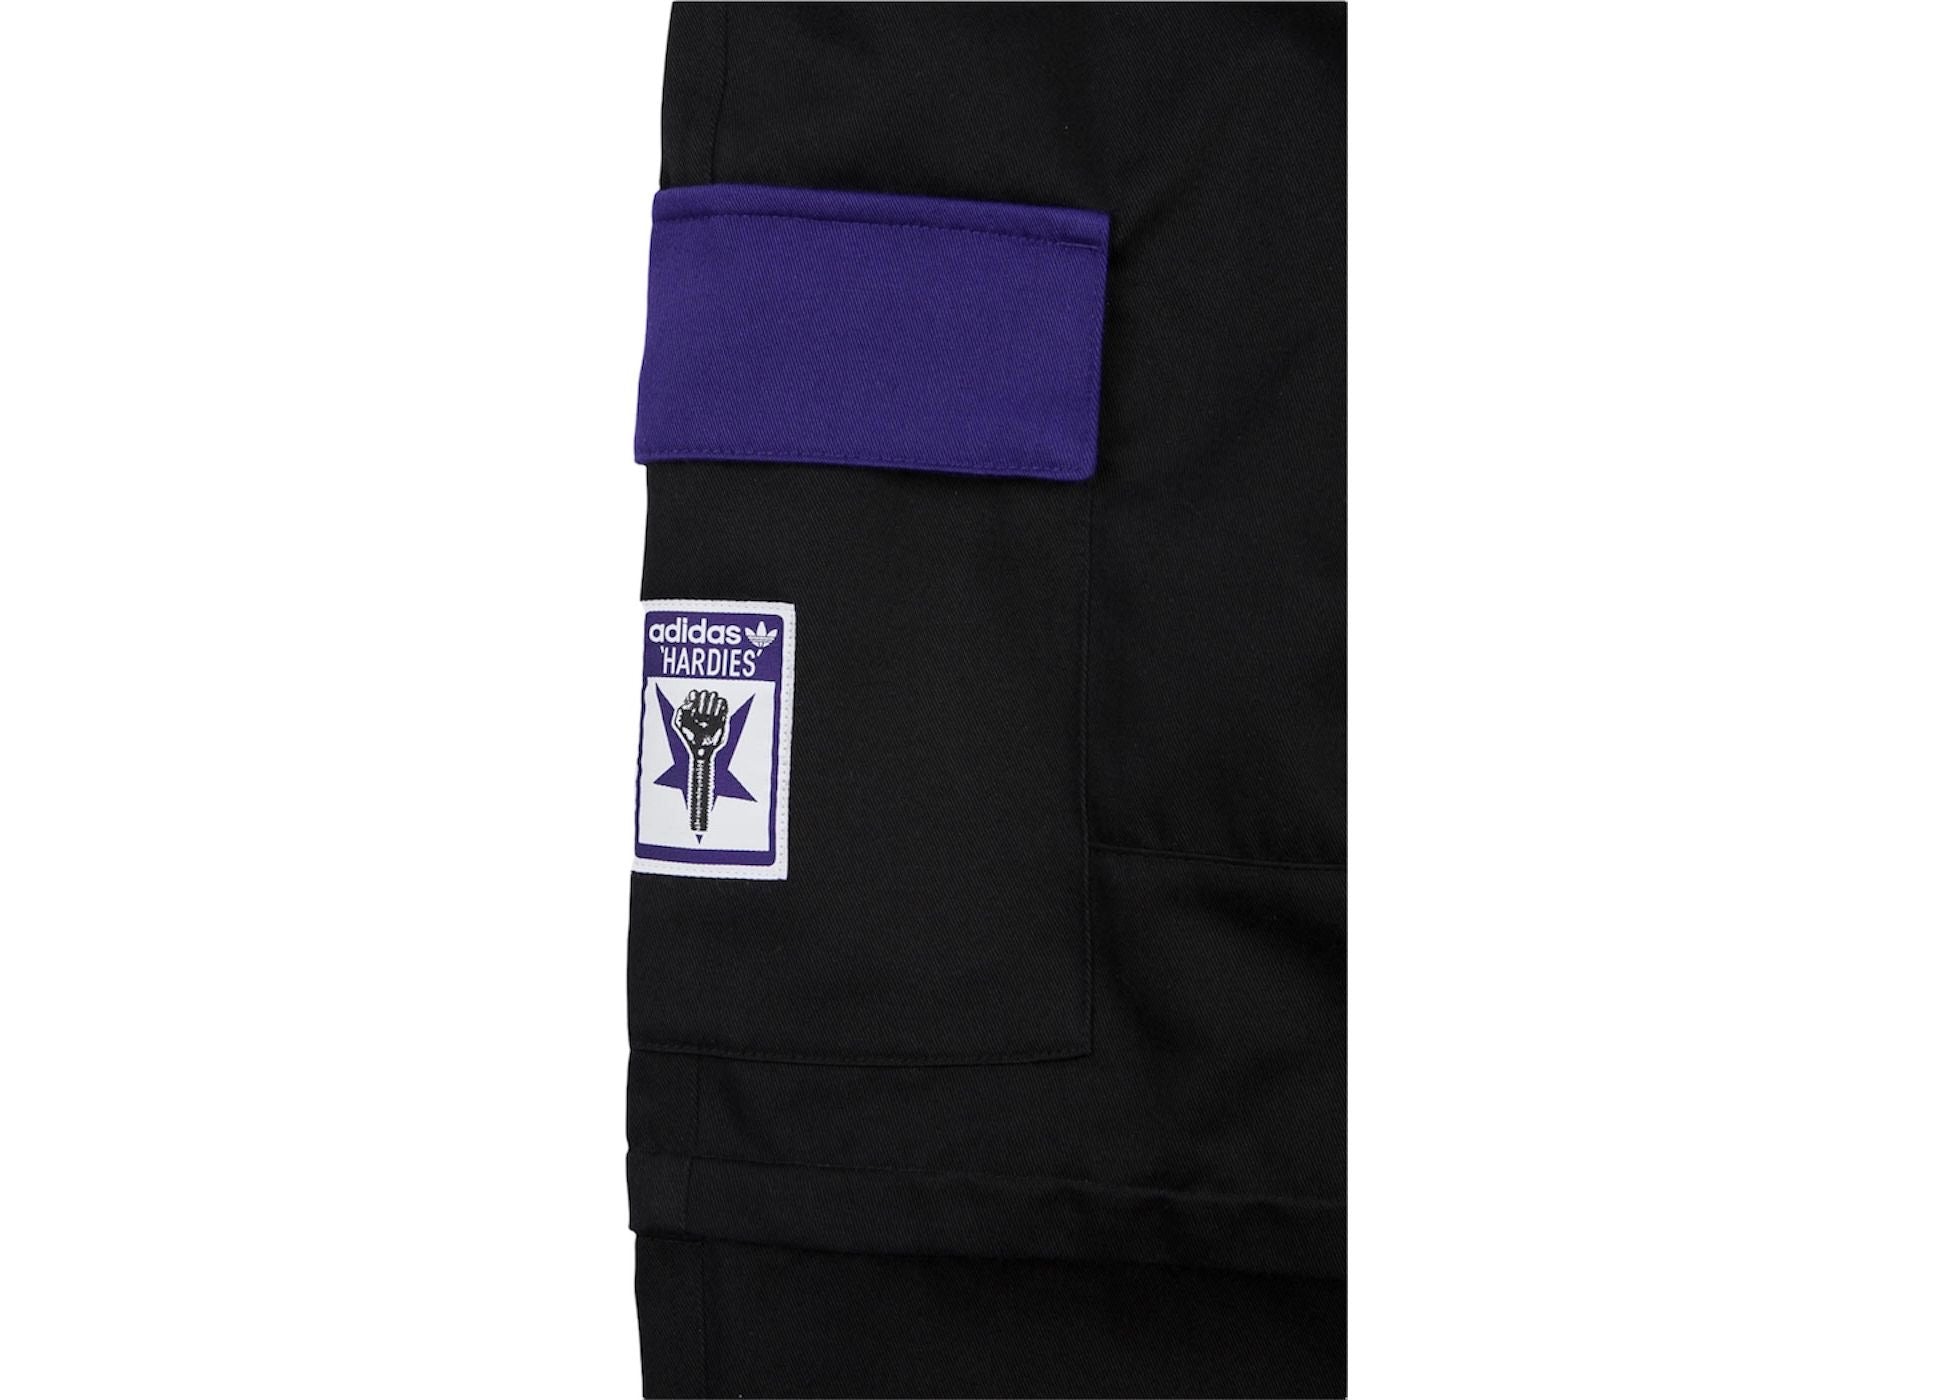 Adidas x Hardies Hardware Pants “Black / Purple” – Piece and Sole